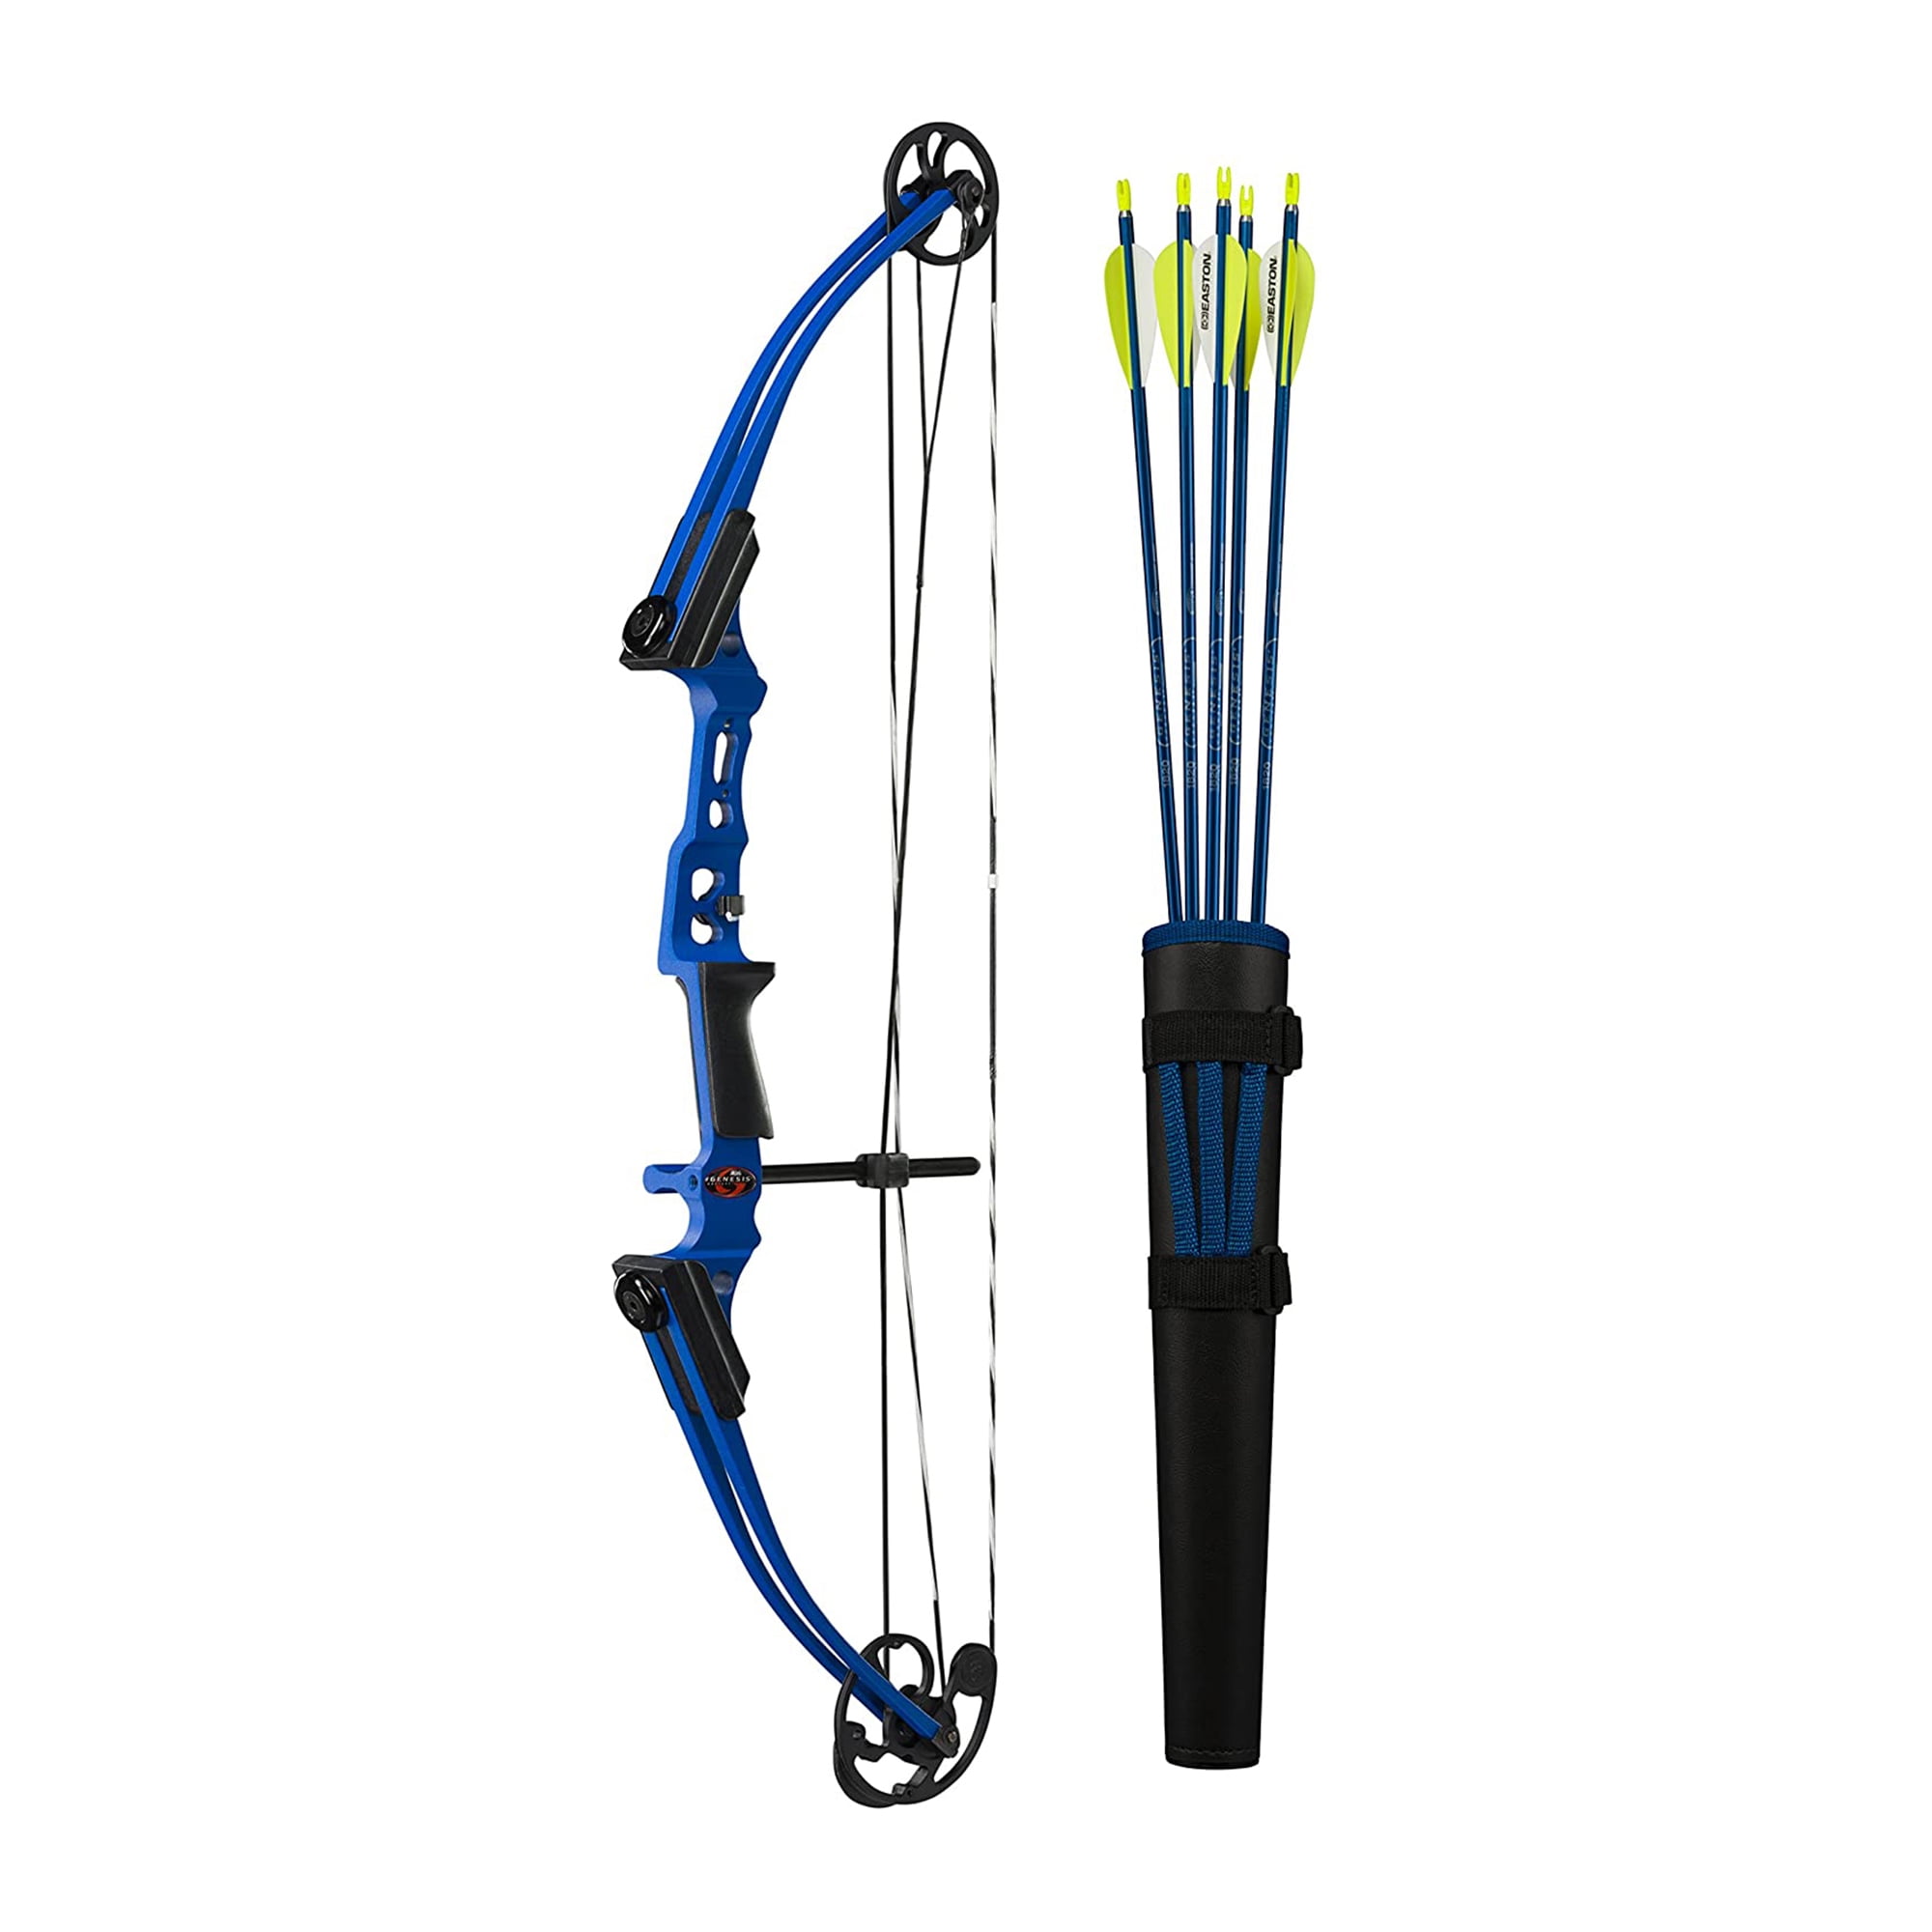 Details about   Left Hand Drop Away Arrow Rest Adjustable Arrow Rest for Compound Bow Archery 